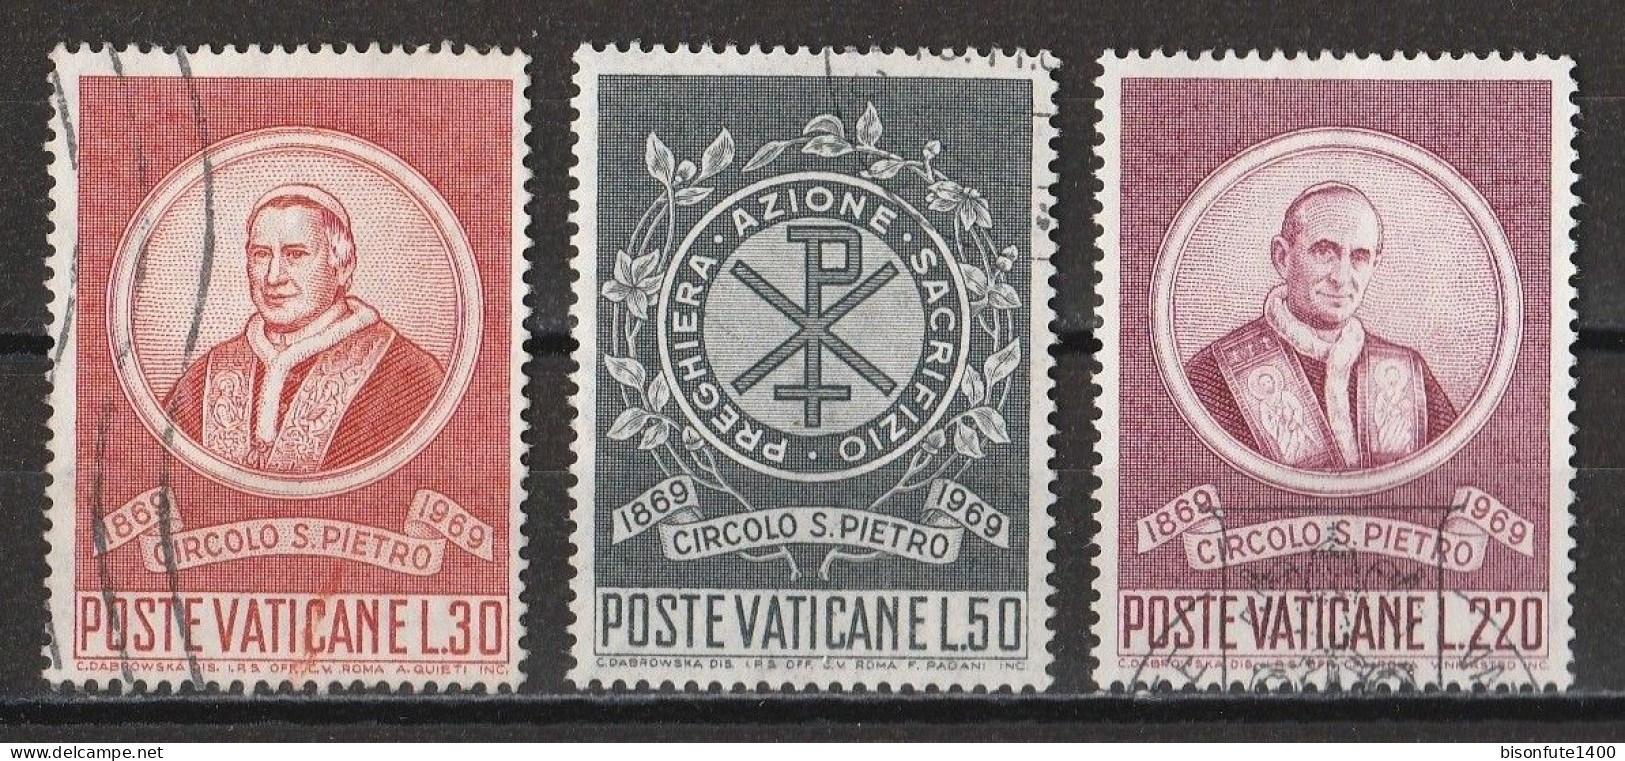 Vatican 1969 : Timbres Yvert & Tellier N° 488 - 489 - 491 - 492 - 493 - 494 - 495 Et 496 Oblitérés. - Usados